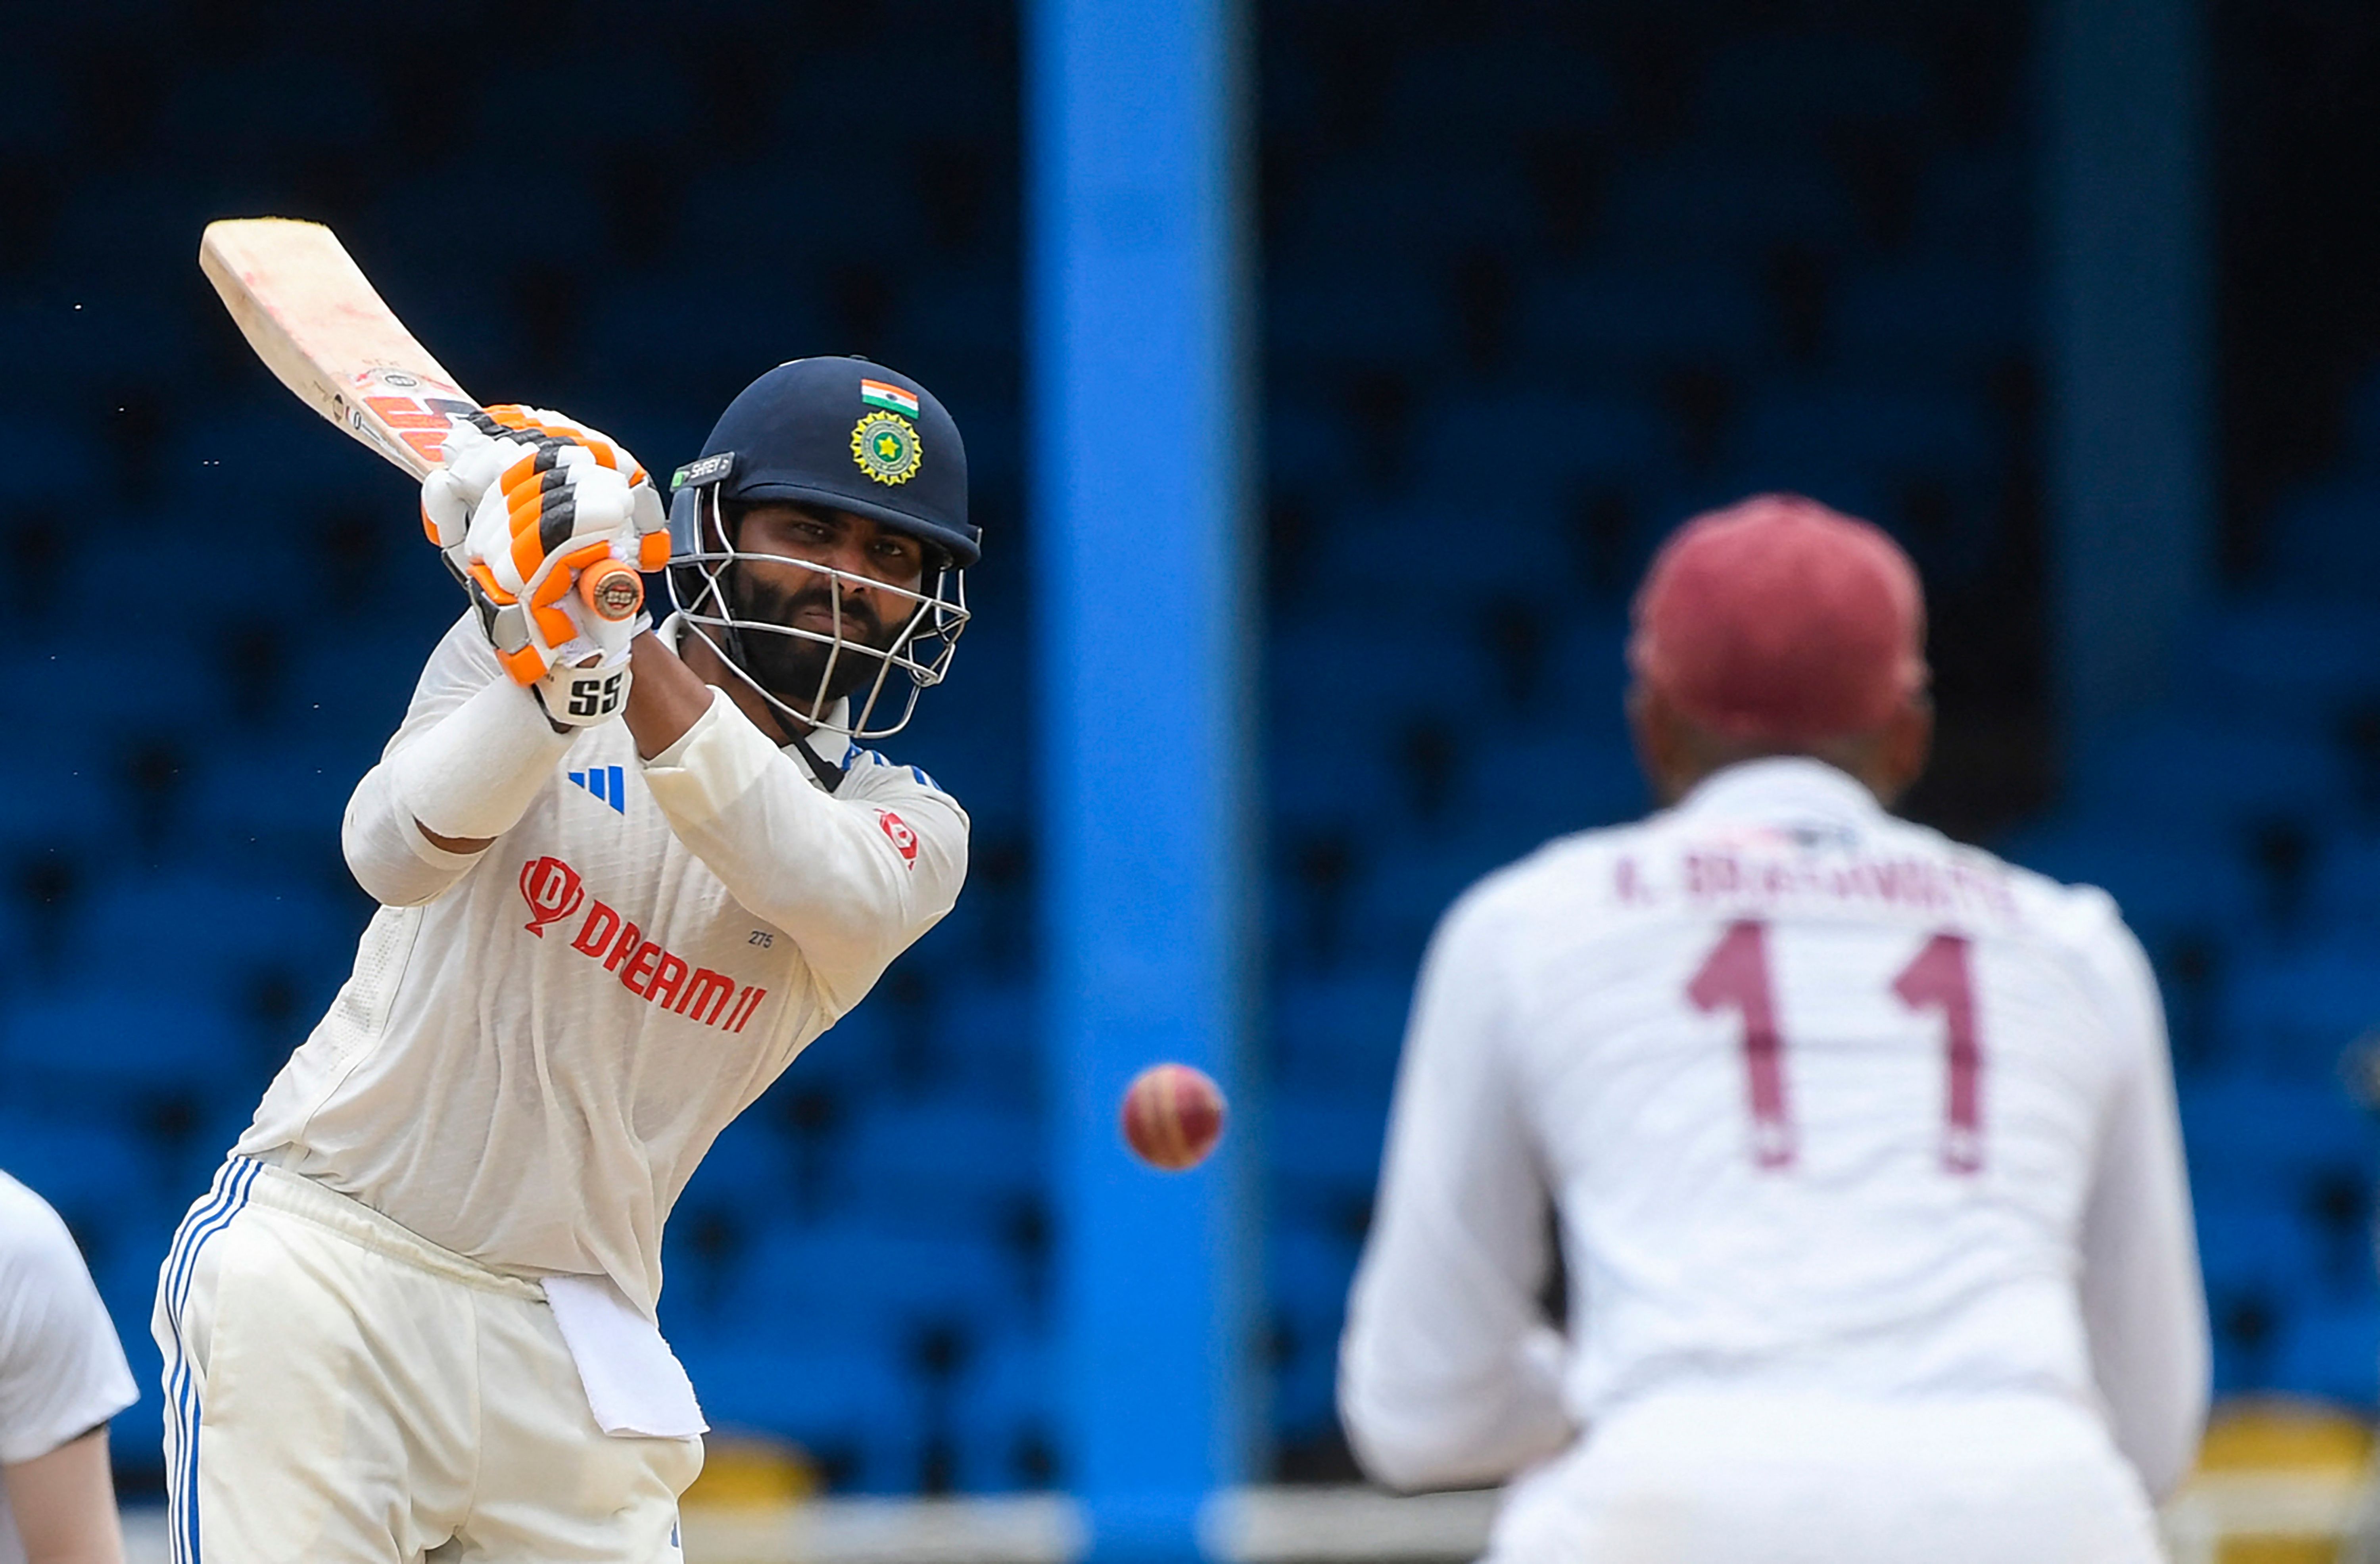 Mukesh Ambanis Viacom 18 Pays $721 Million for Indian Cricket Rights